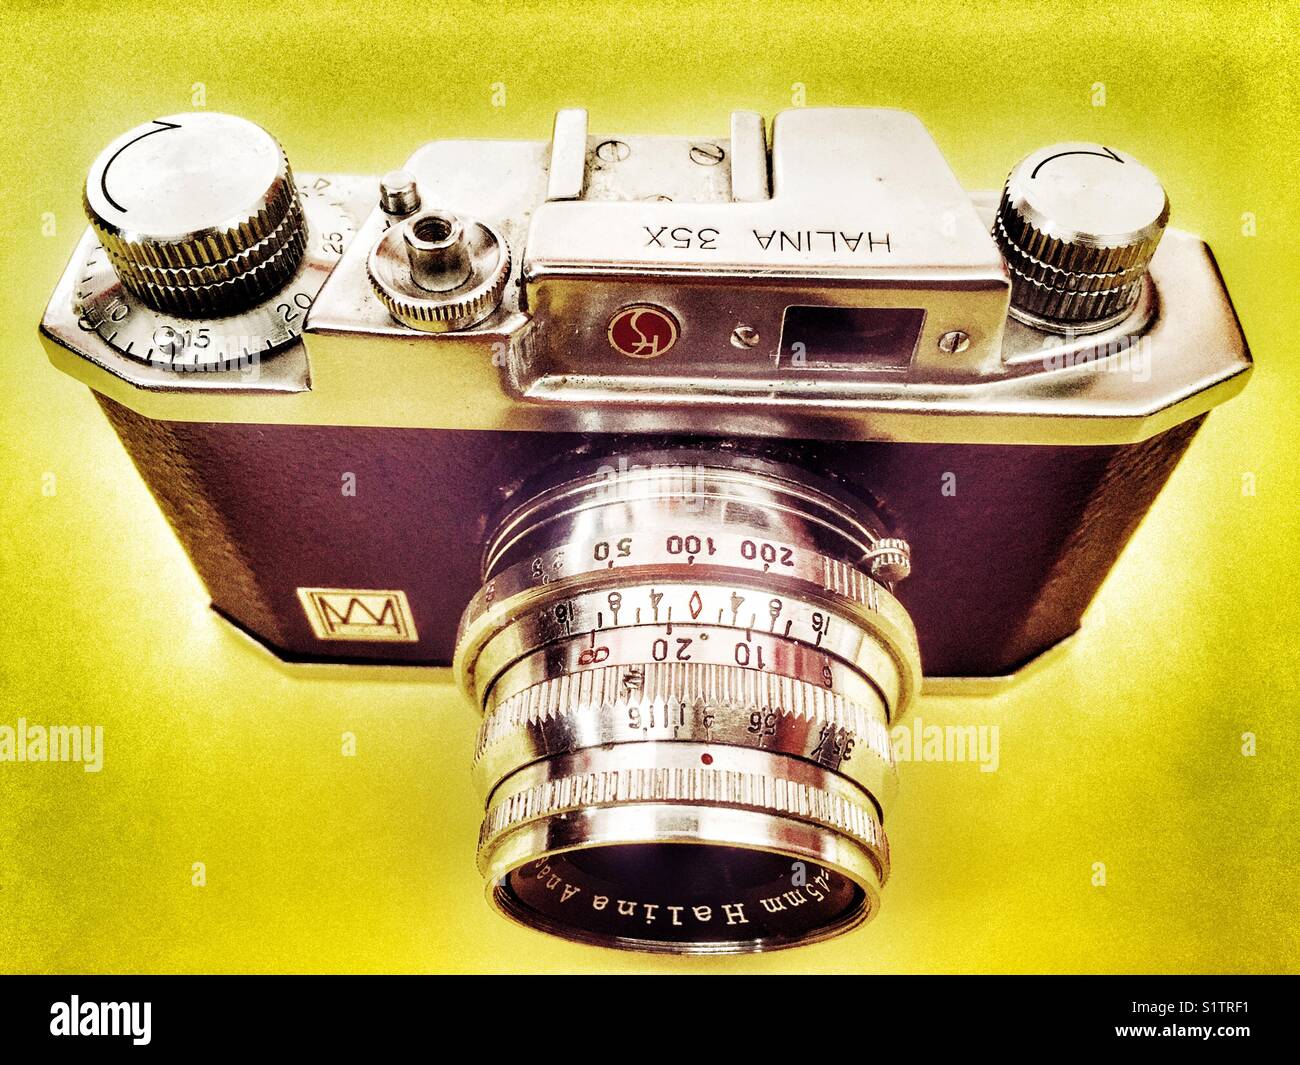 Halina 35x Film Kamera Stockfotografie - Alamy